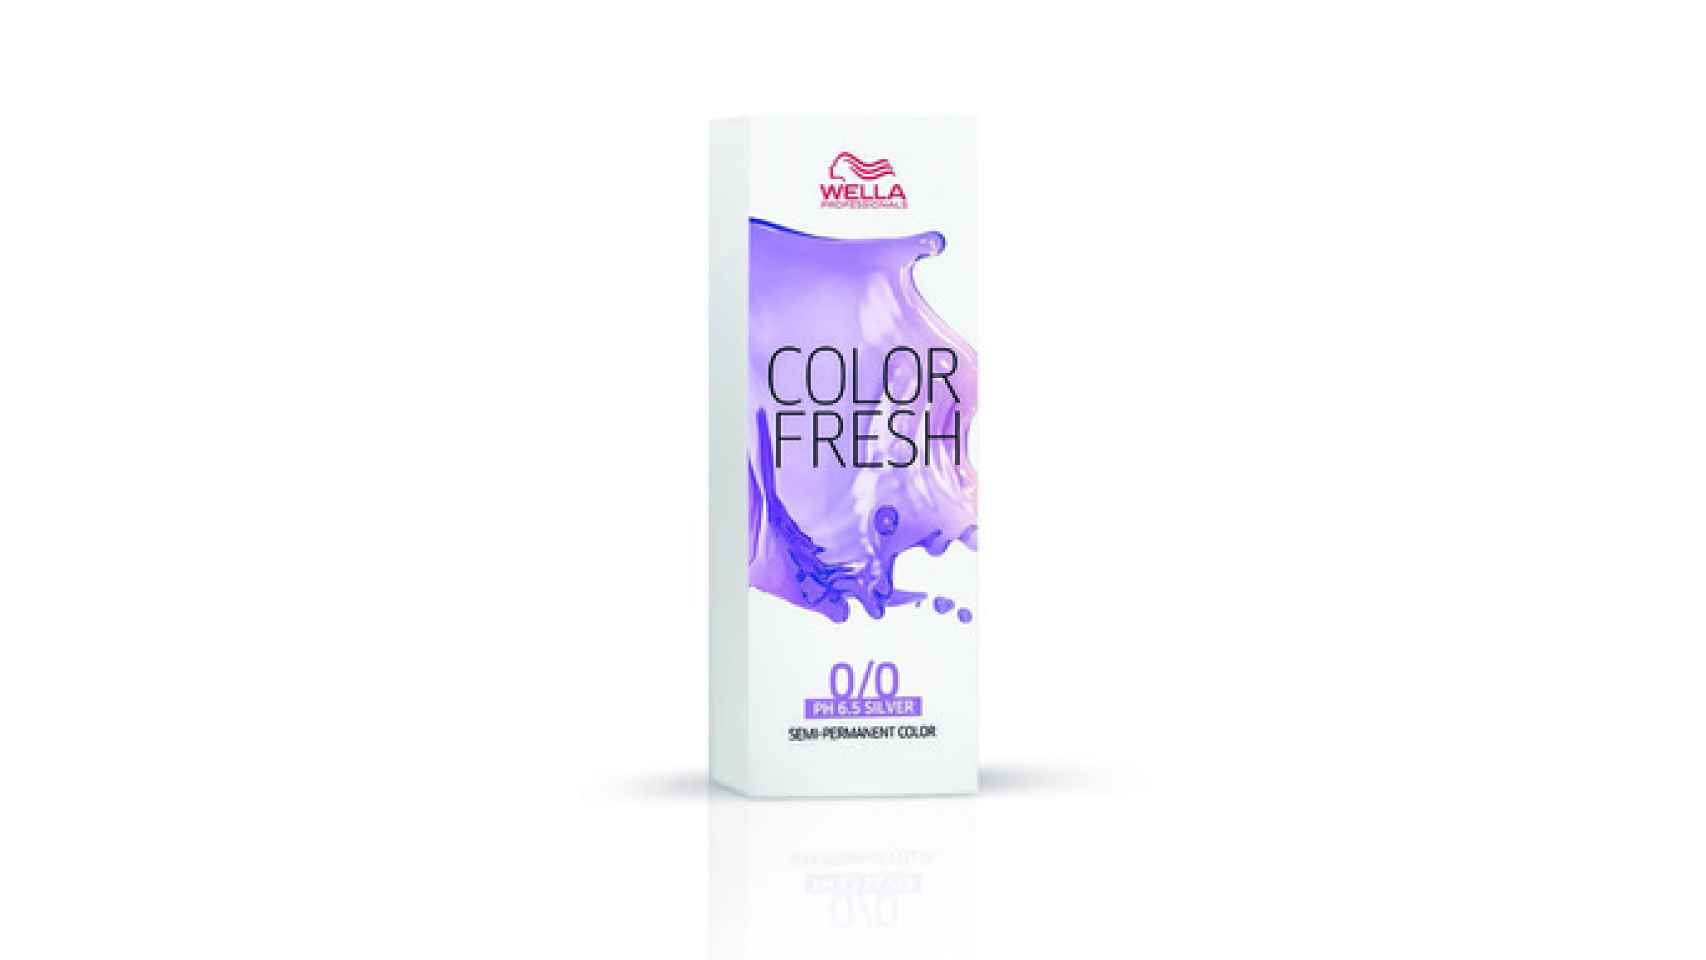 Color Fresh de Wella.